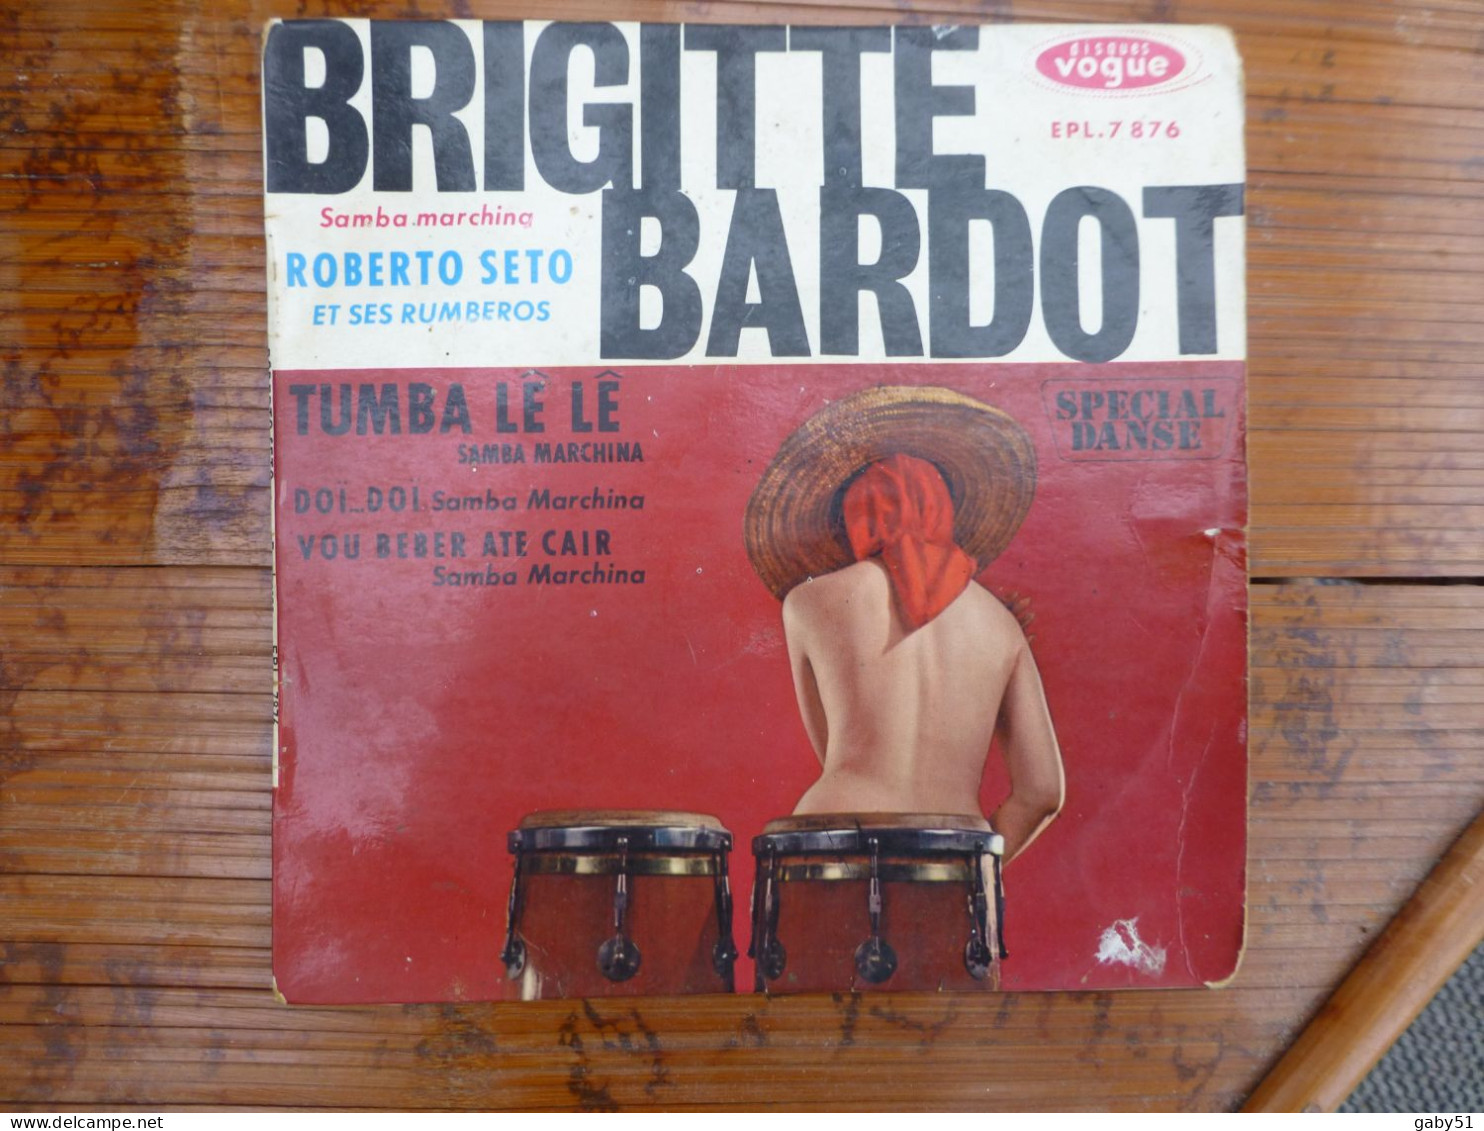 Brigitte Bardot Roberto Seto, Tumba Le Le Vogue EPL 7876 - 45 Rpm - Maxi-Singles